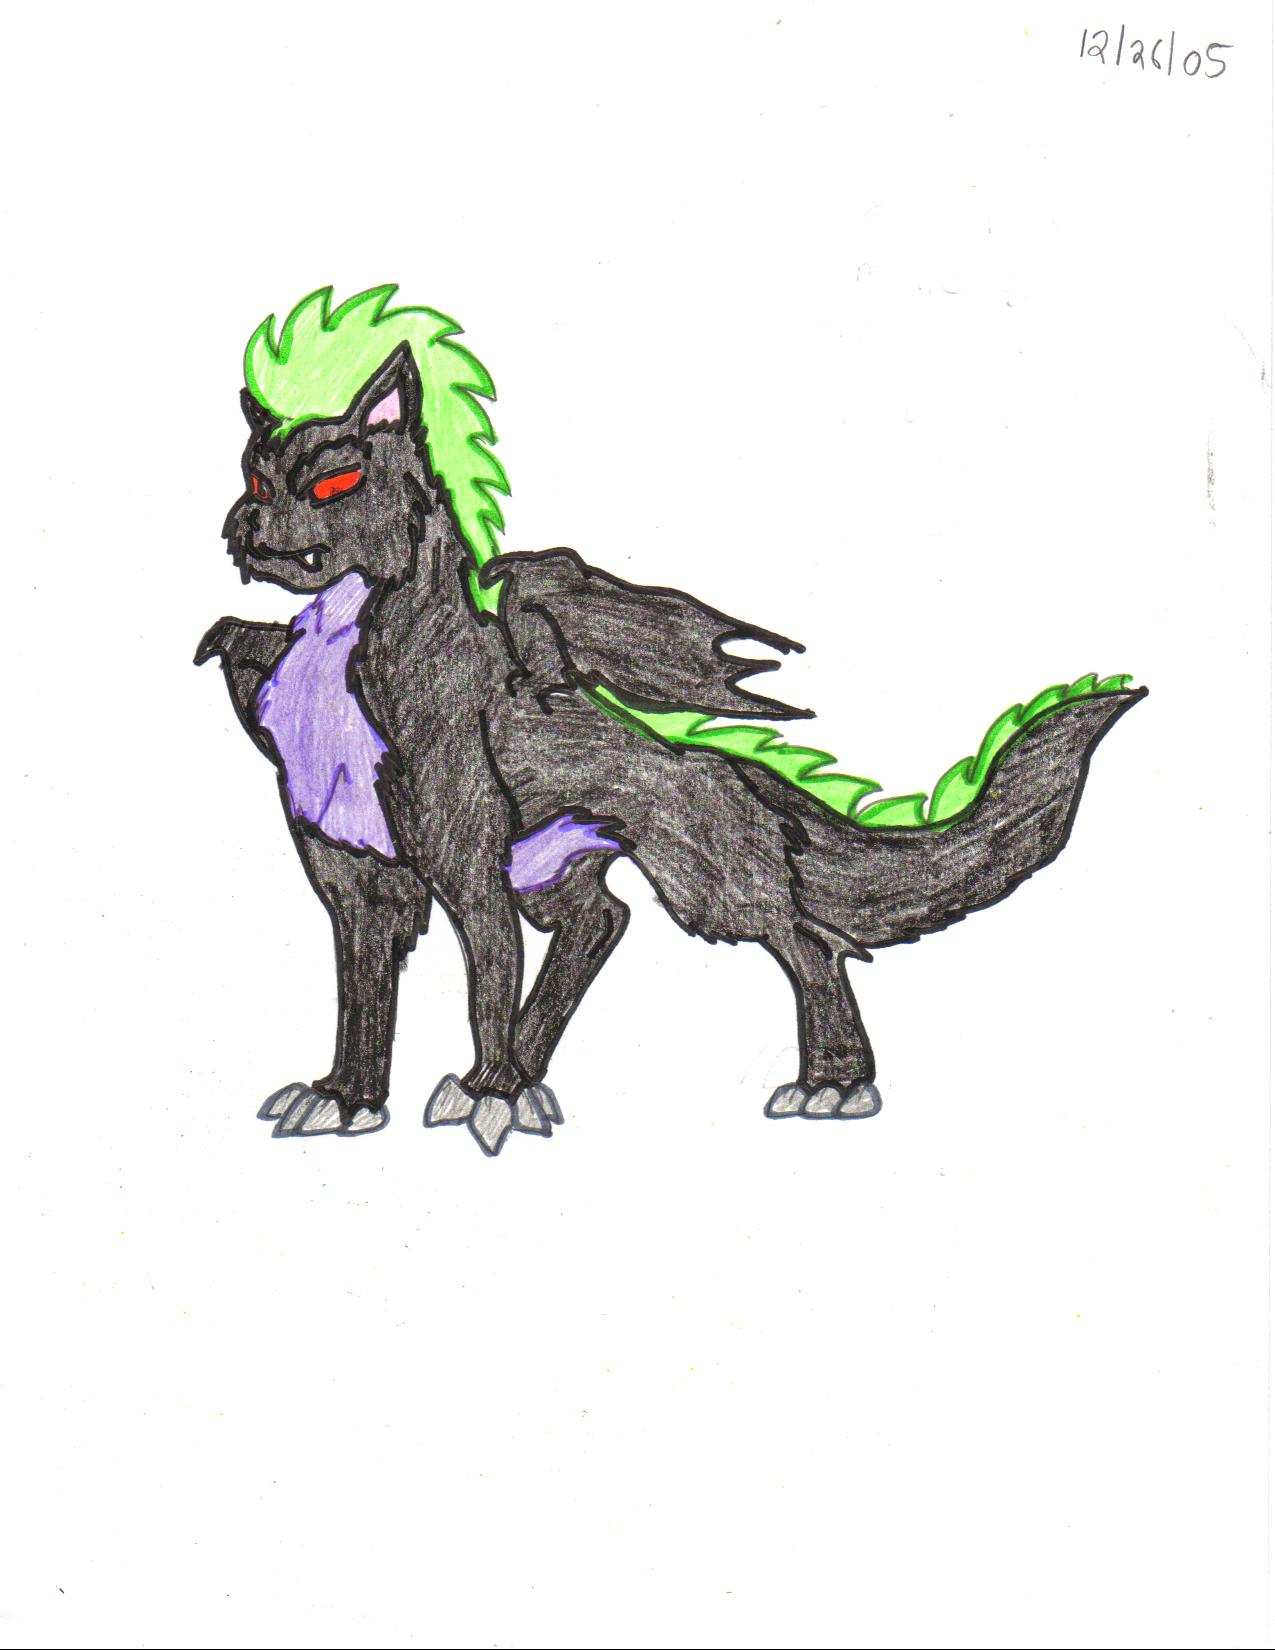 jonny's lunar dragon, Drakor by crocdragon89